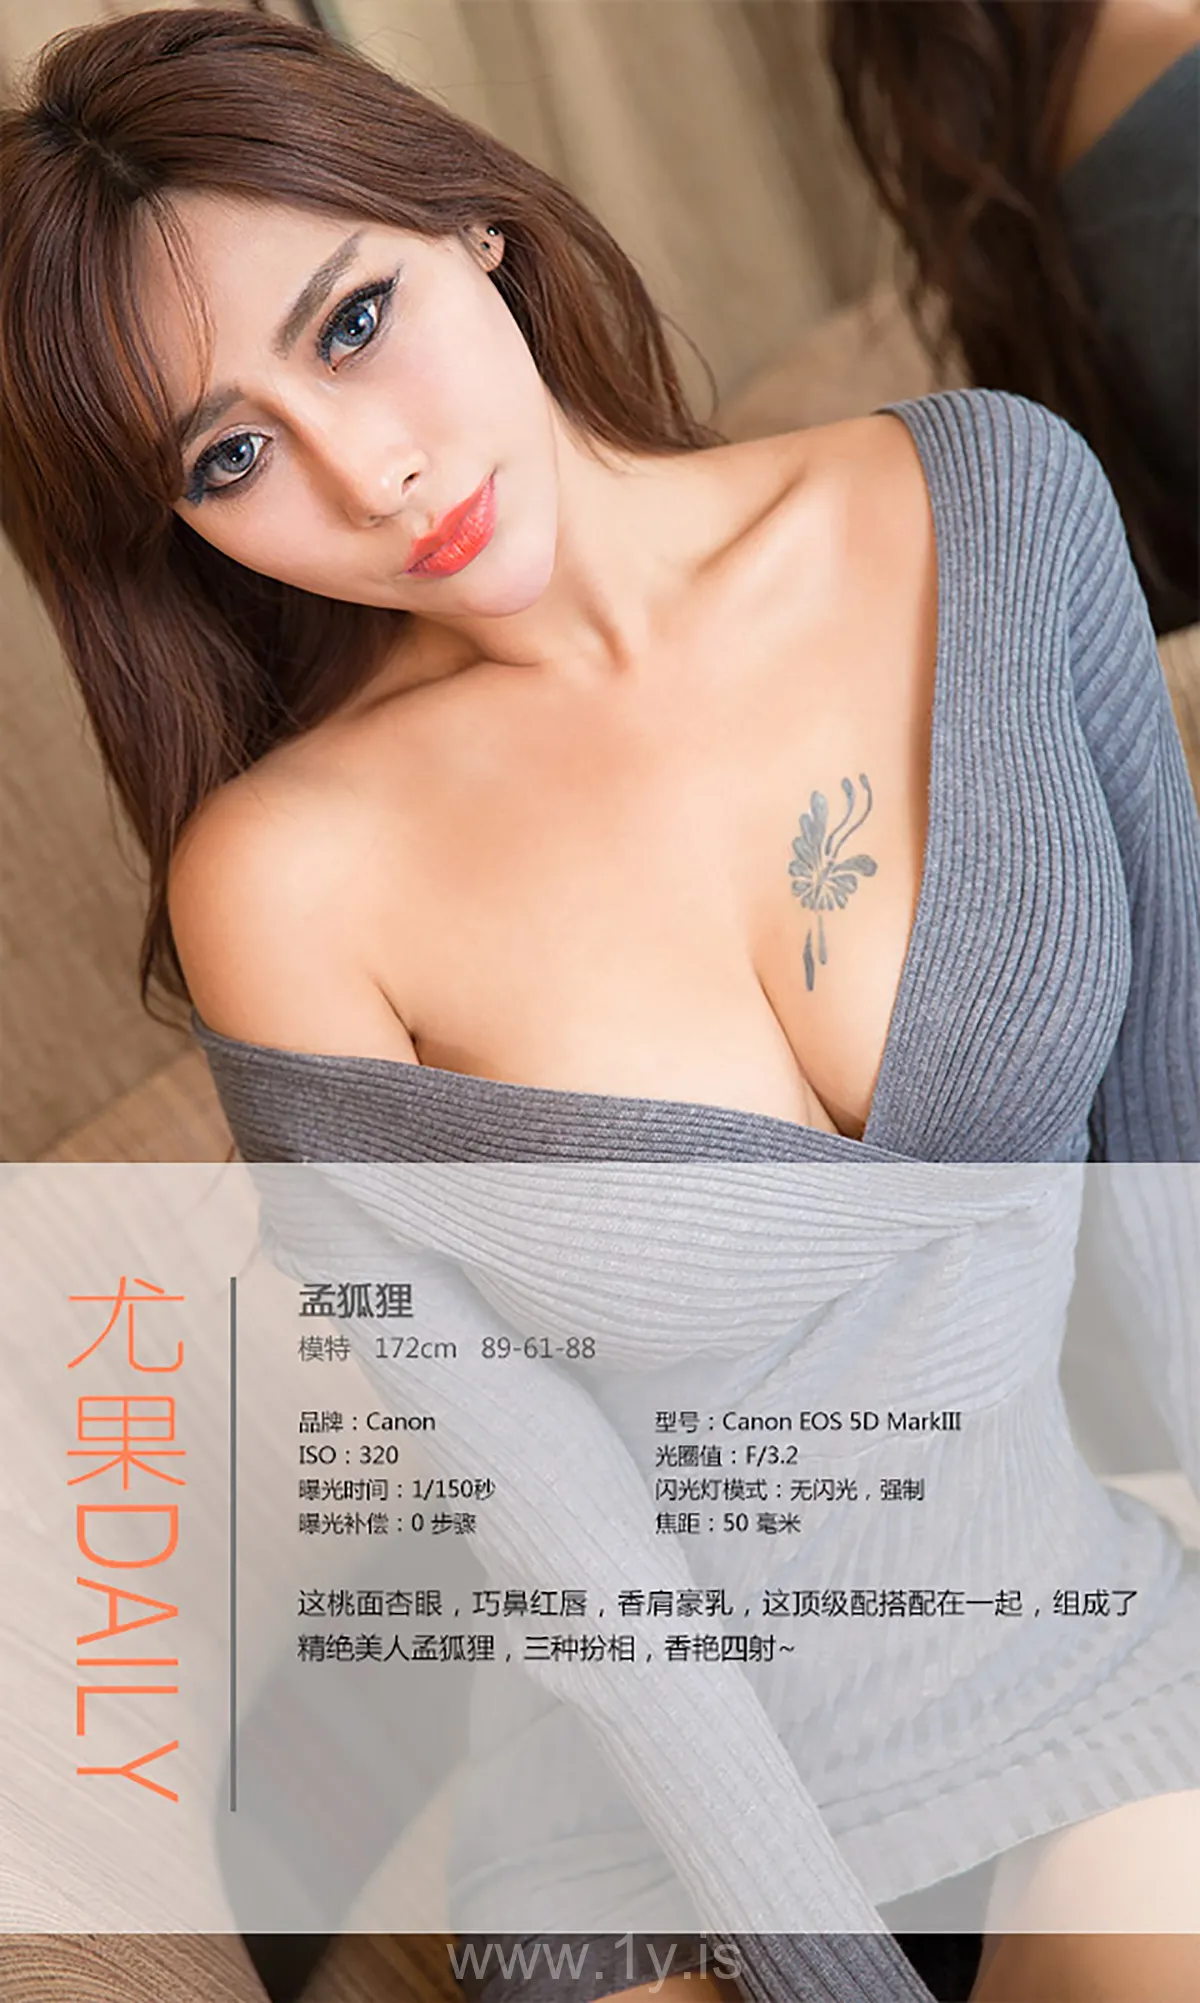 UGIRLS NO.207 Cute & Stylish Chinese Women 孟狐狸